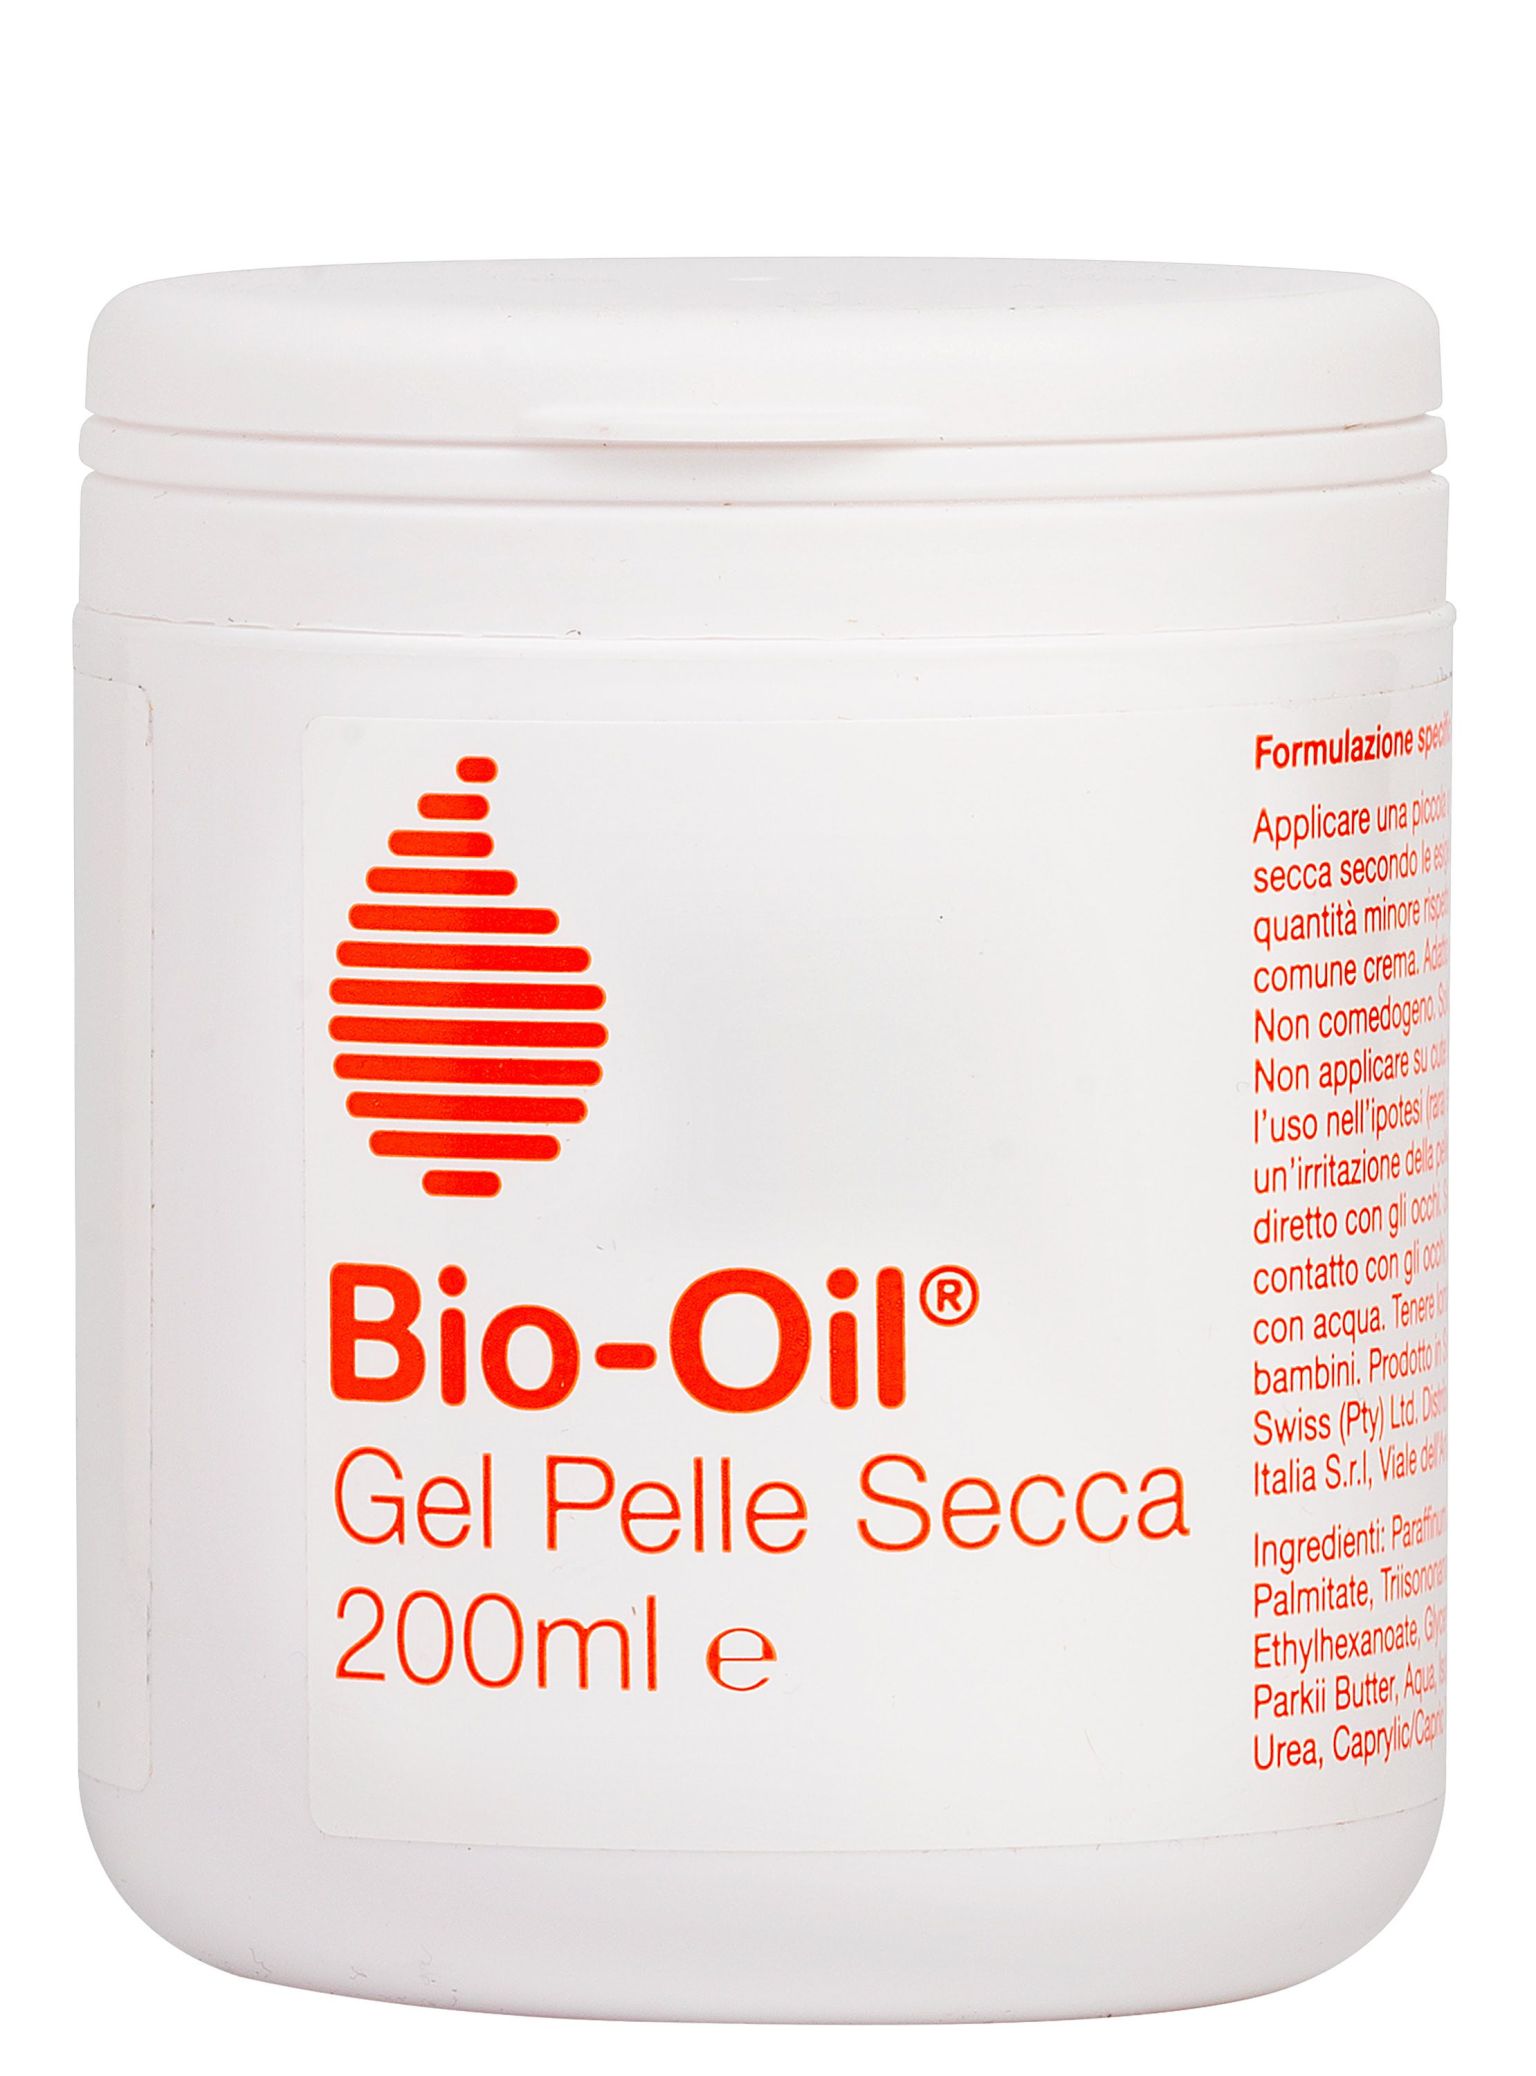 975431964 - Bio-Oil Gel Pelle Secca 200ml - 7892653_2.jpg